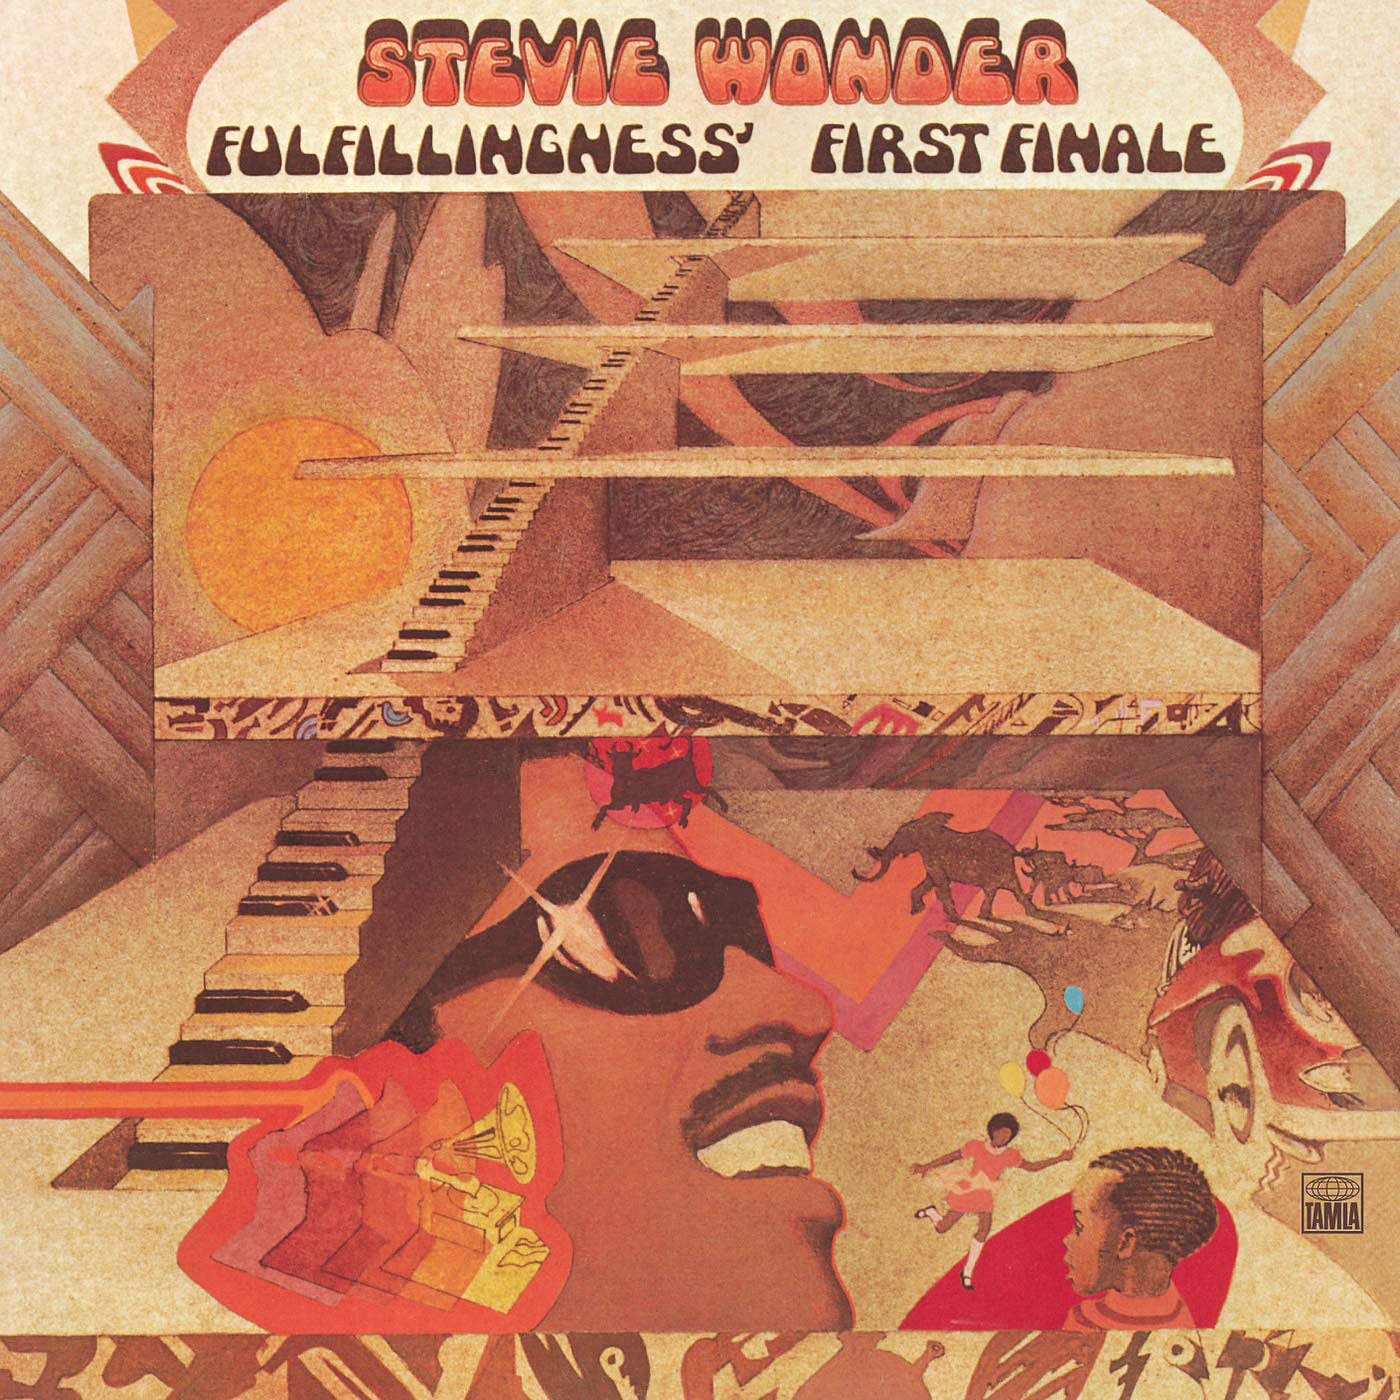 305 Stevie Wonder – Fulfillingness First Finale